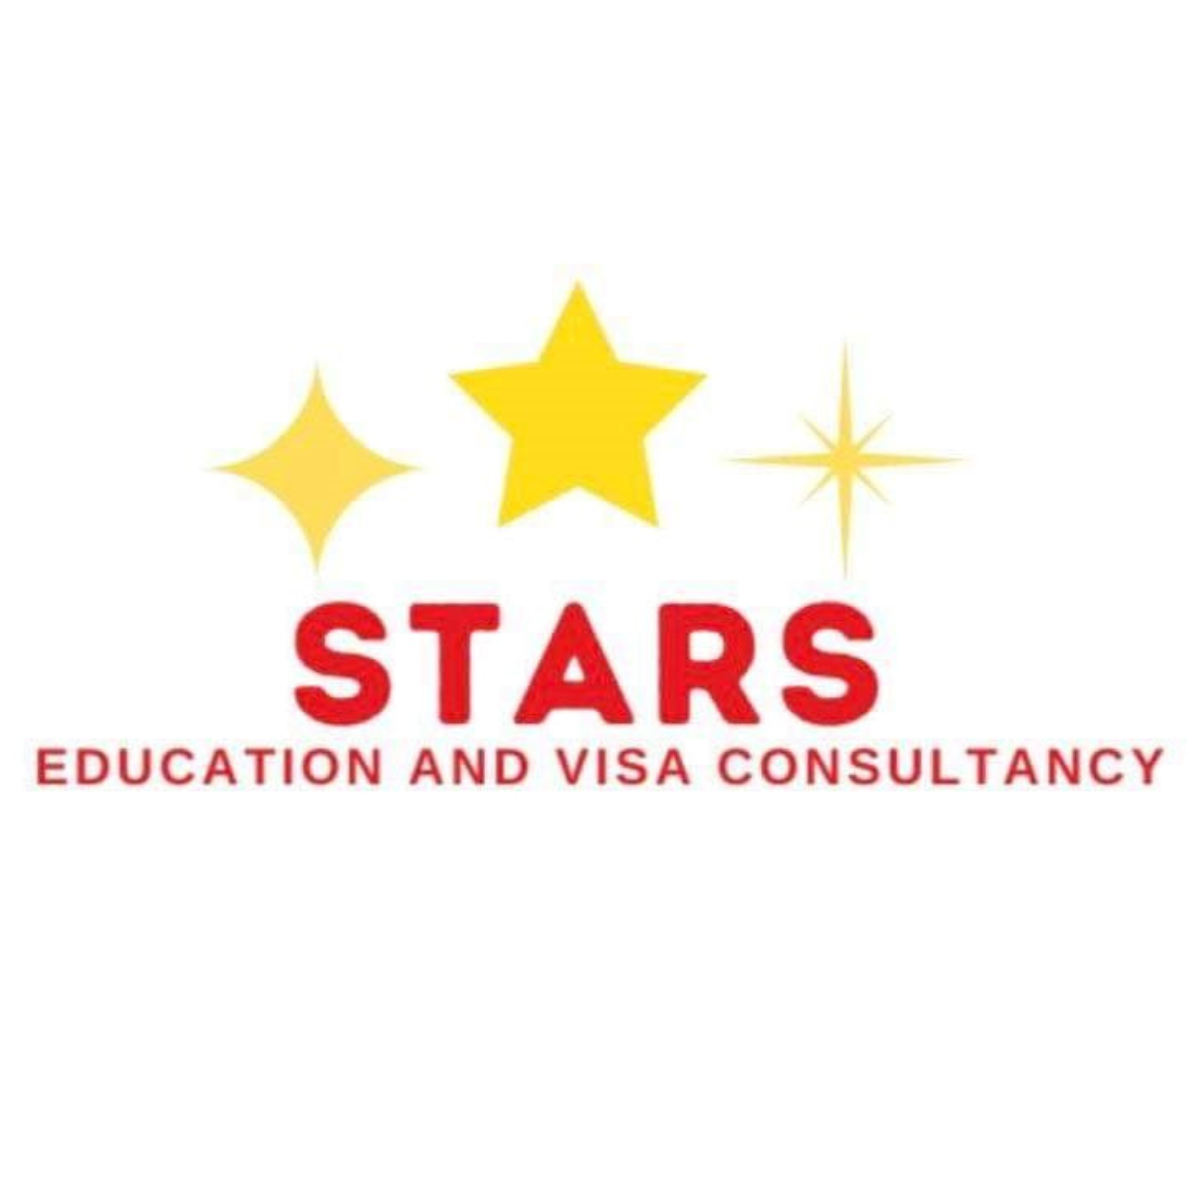 emerged visa consultancy